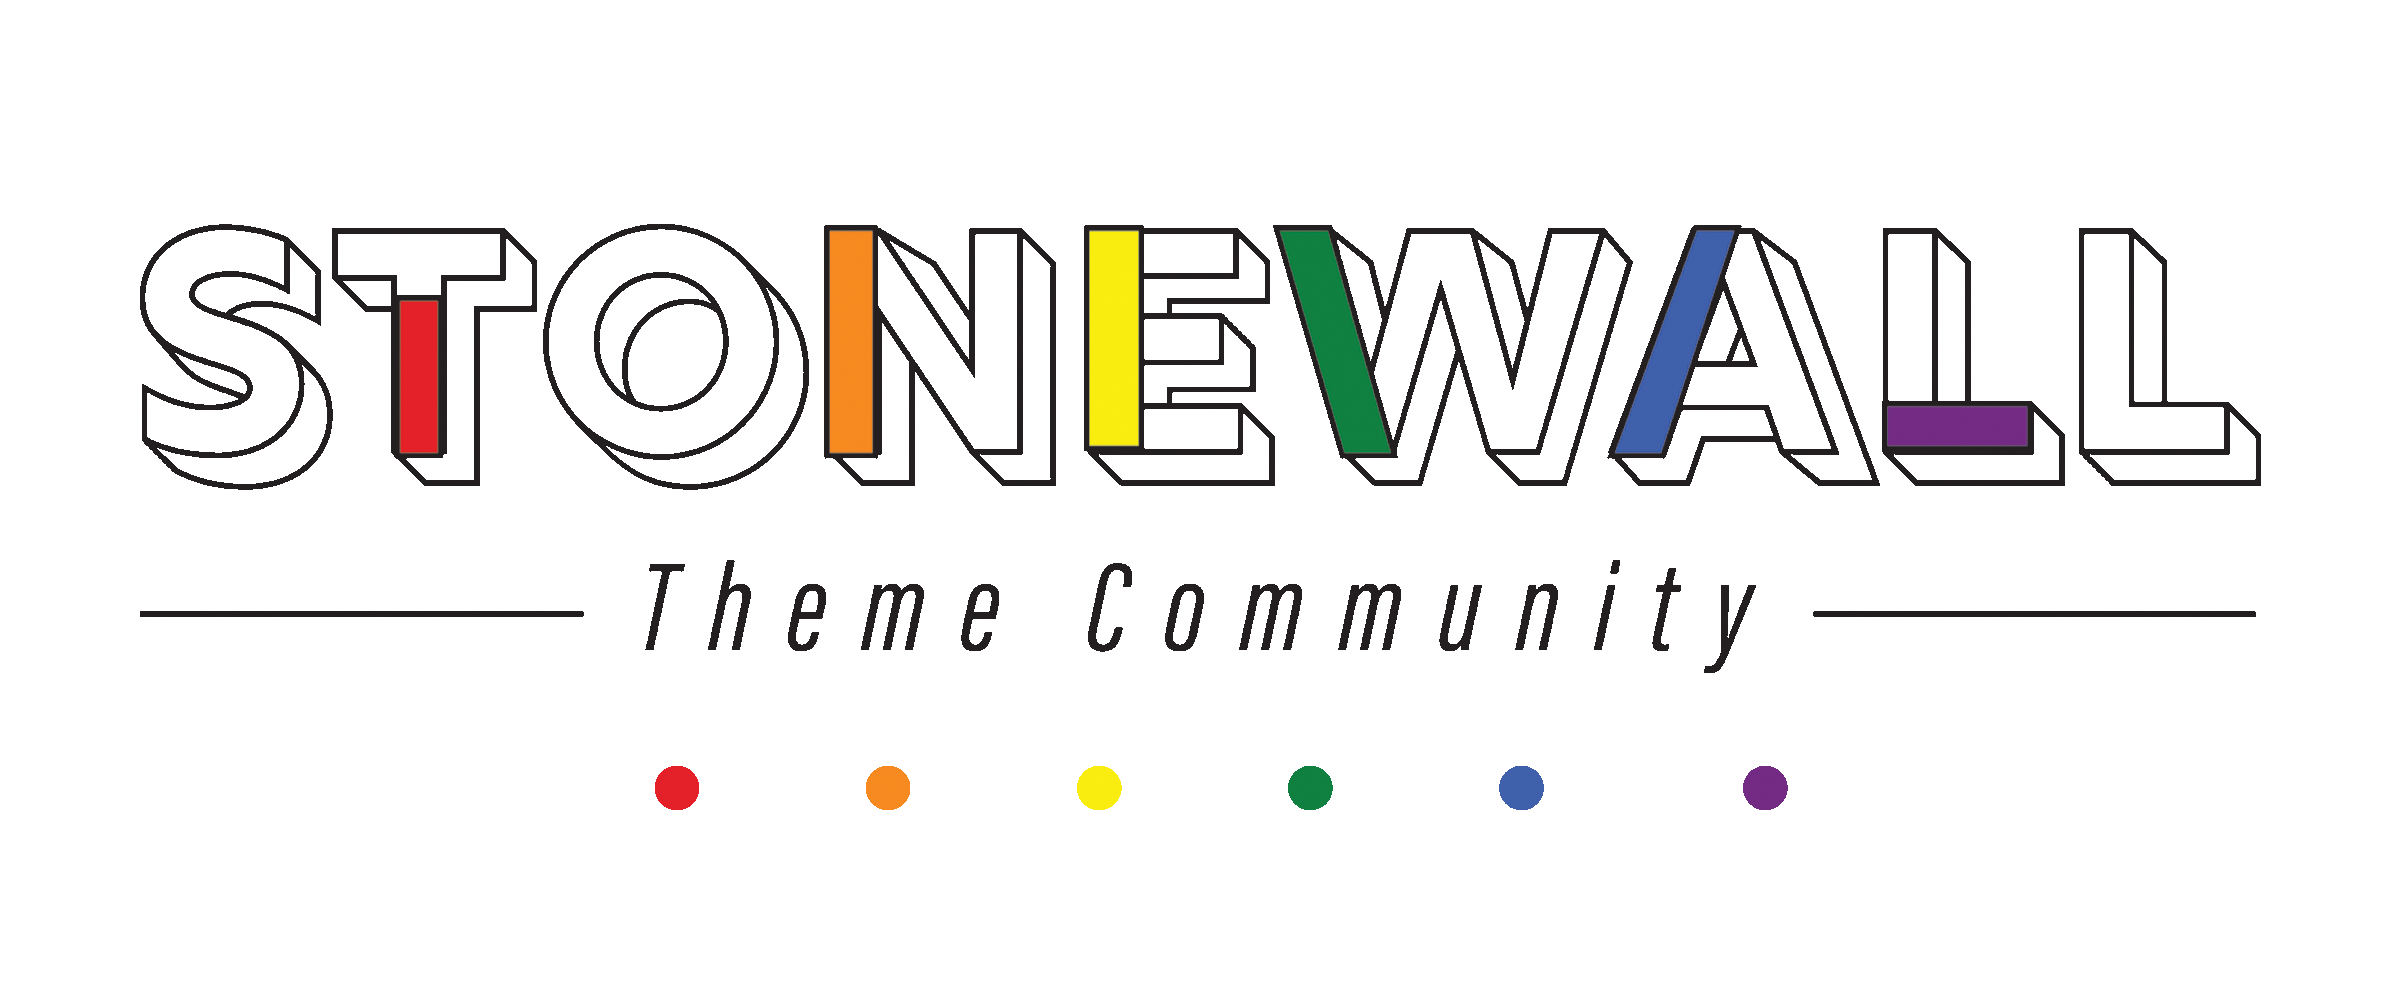 stonewall living-learning community logo